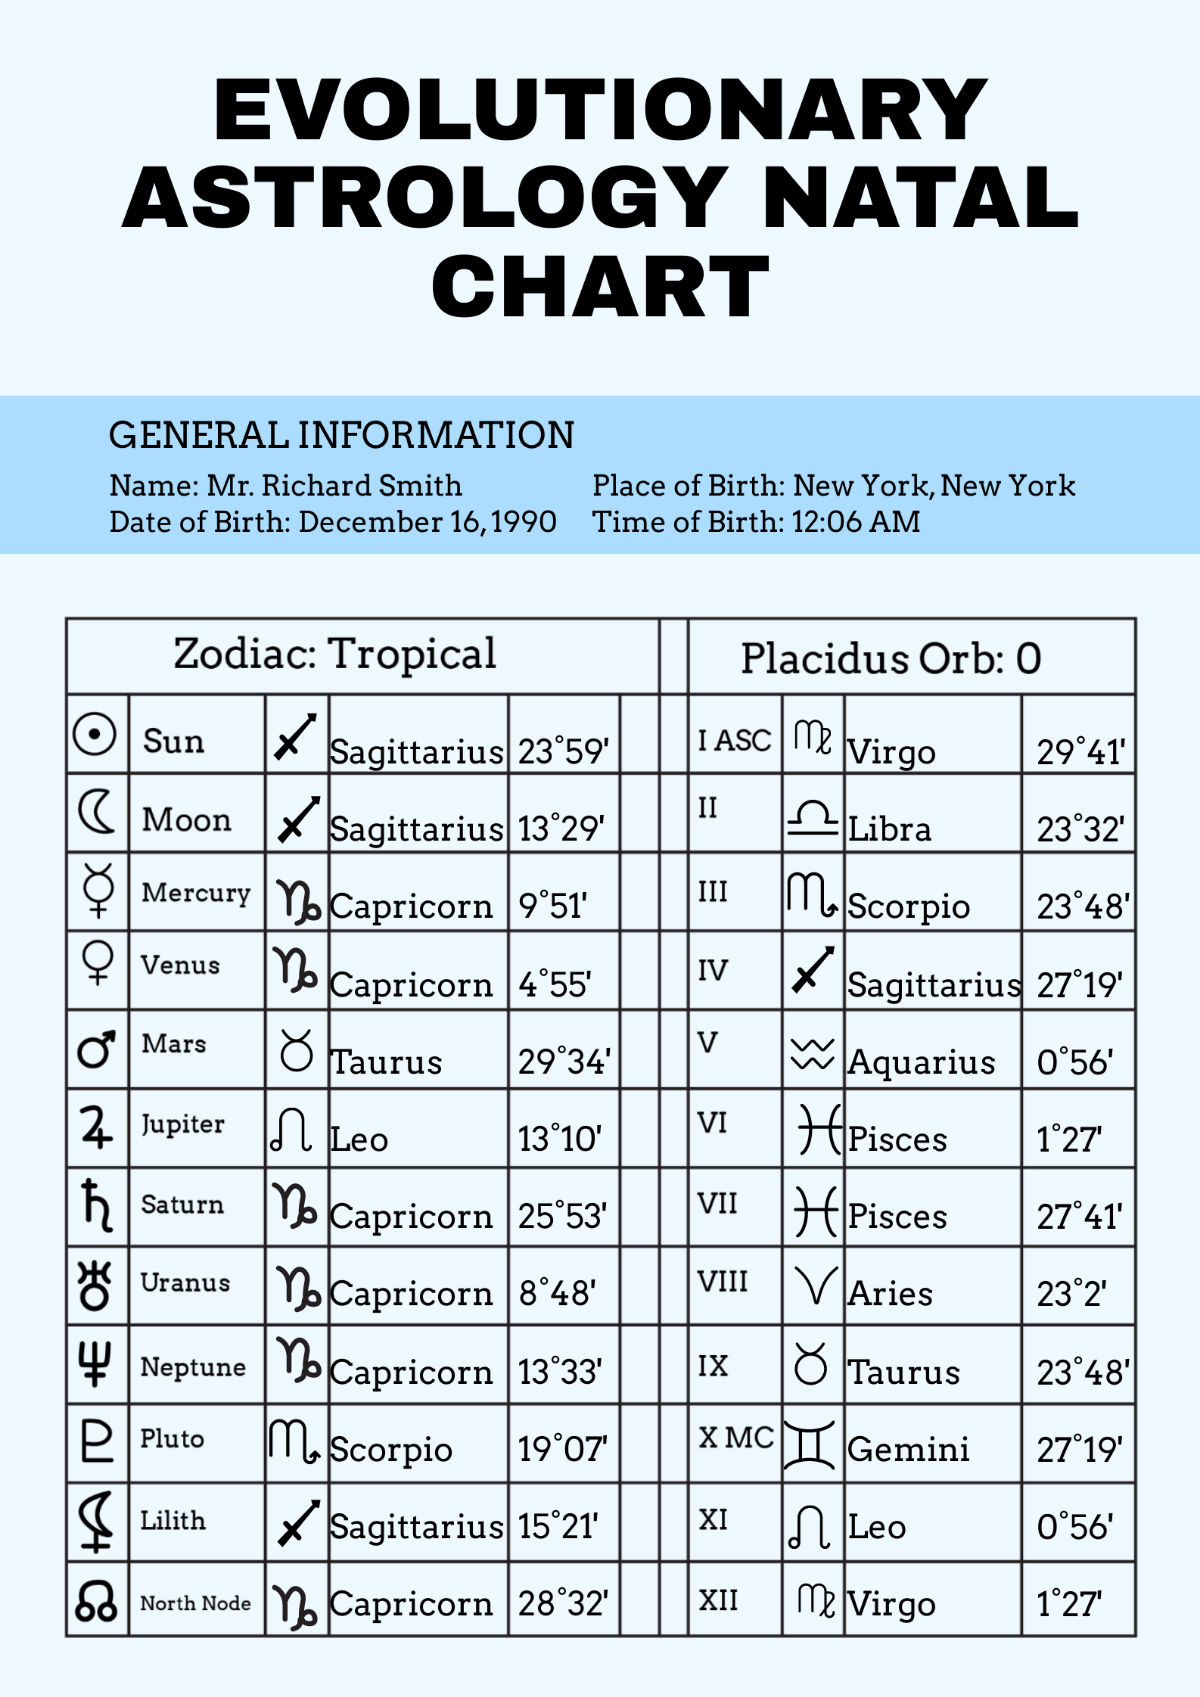 Free Evolutionary Astrology Natal Chart Template